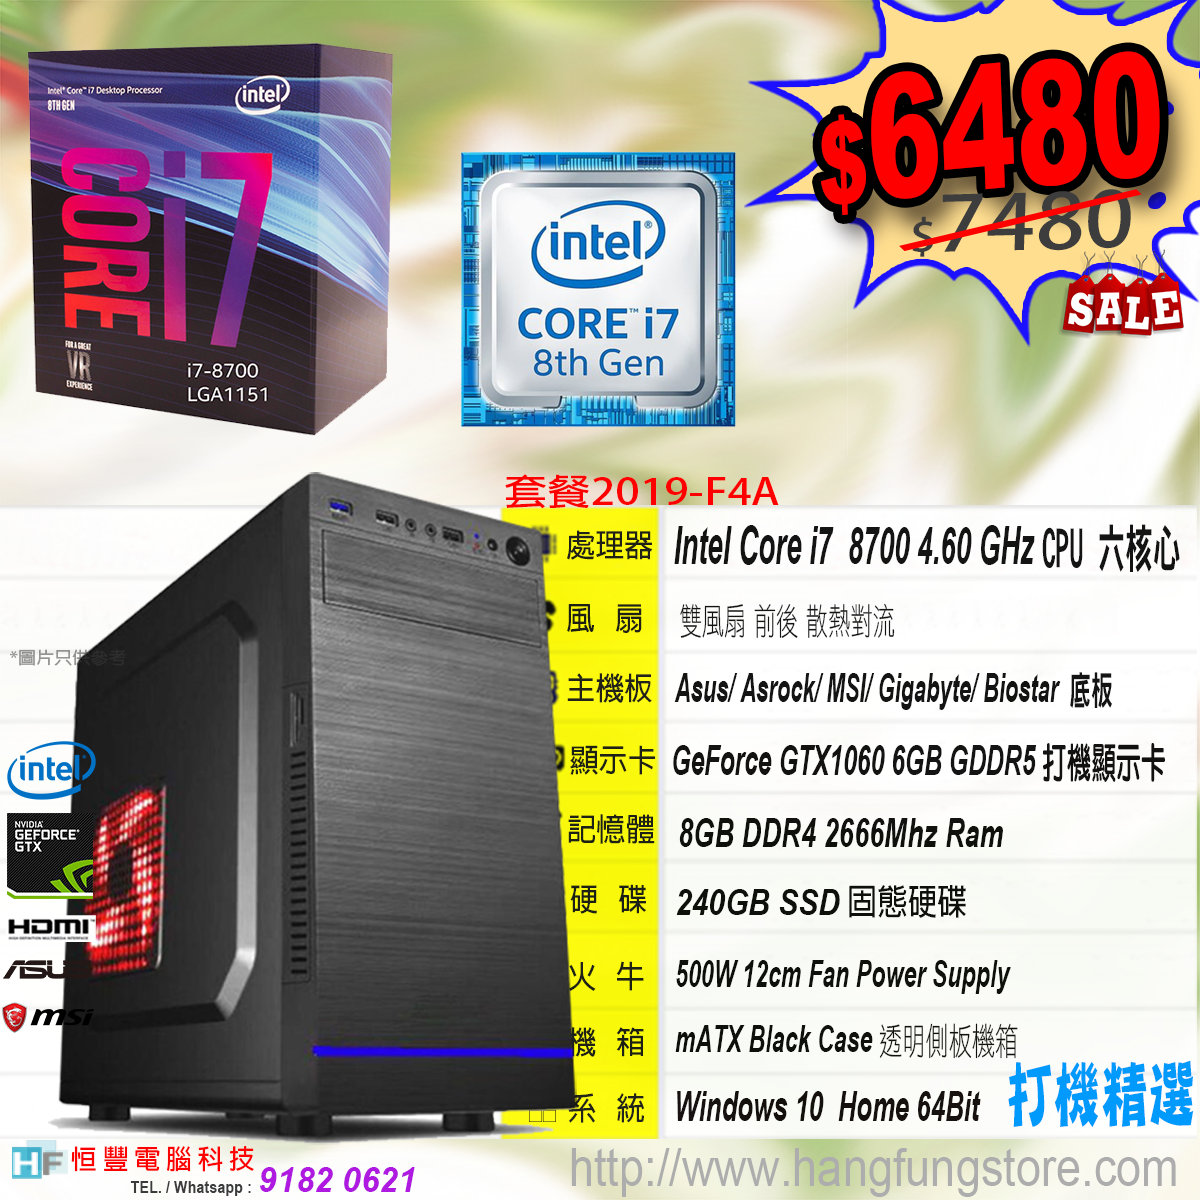 Intel® Core™ i7 8700 4.60 GHz, GTX1060, 240GB SSD